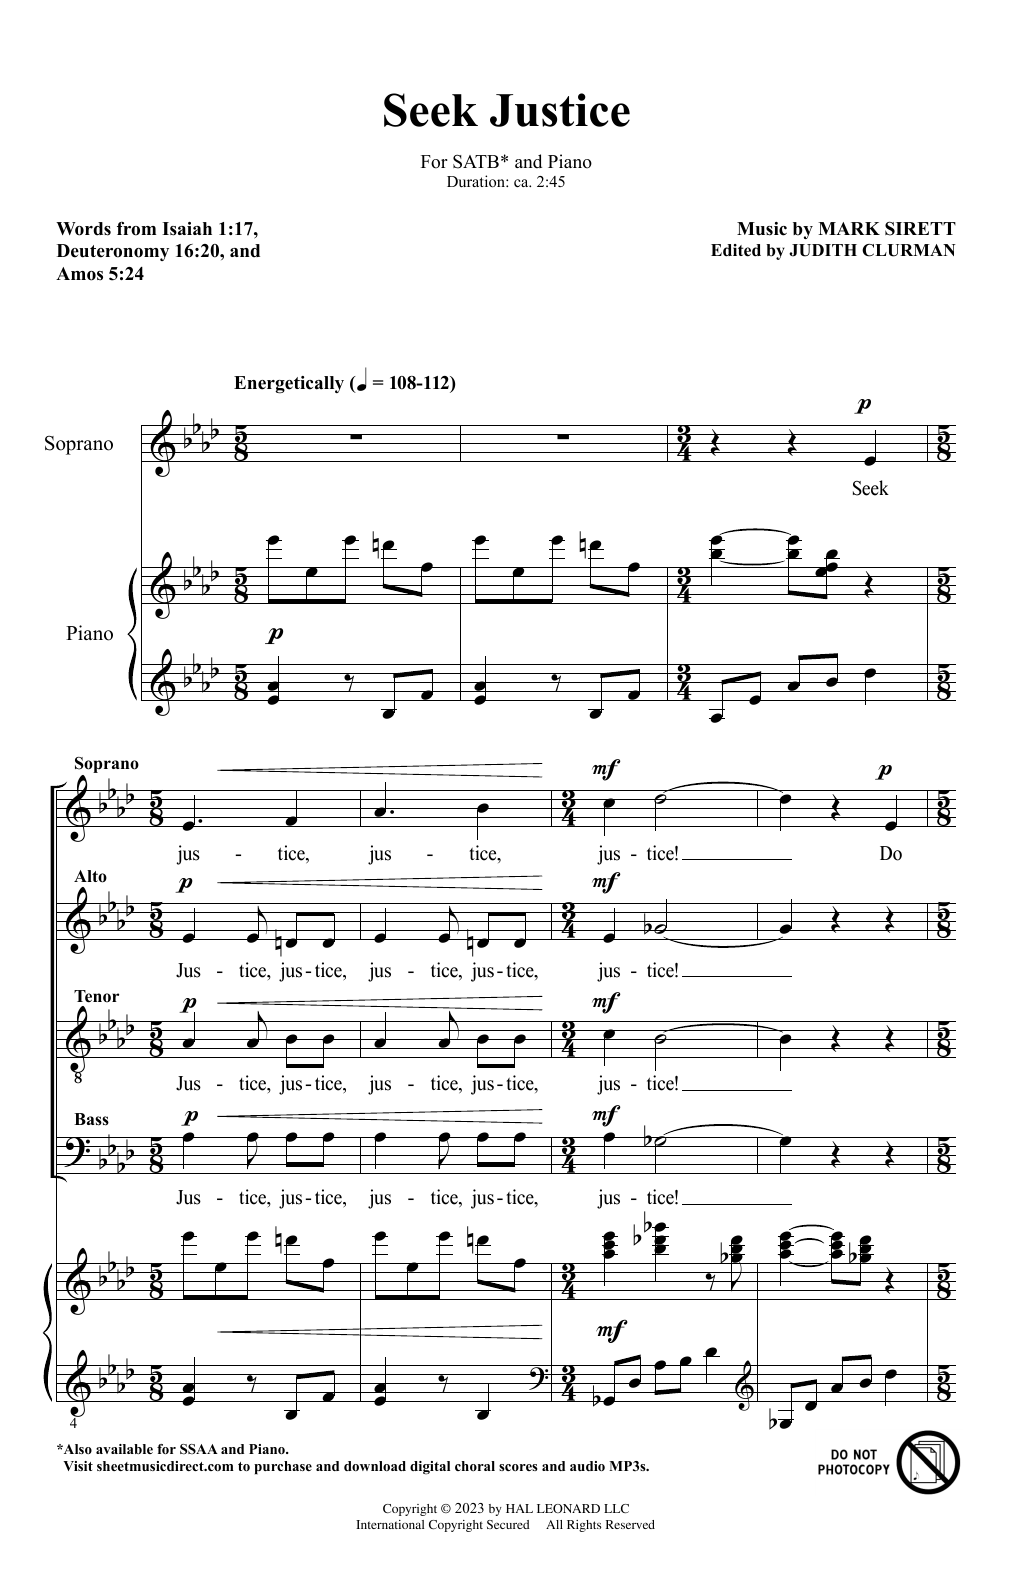 Mark Sirett Seek Justice Sheet Music Notes & Chords for SATB Choir - Download or Print PDF